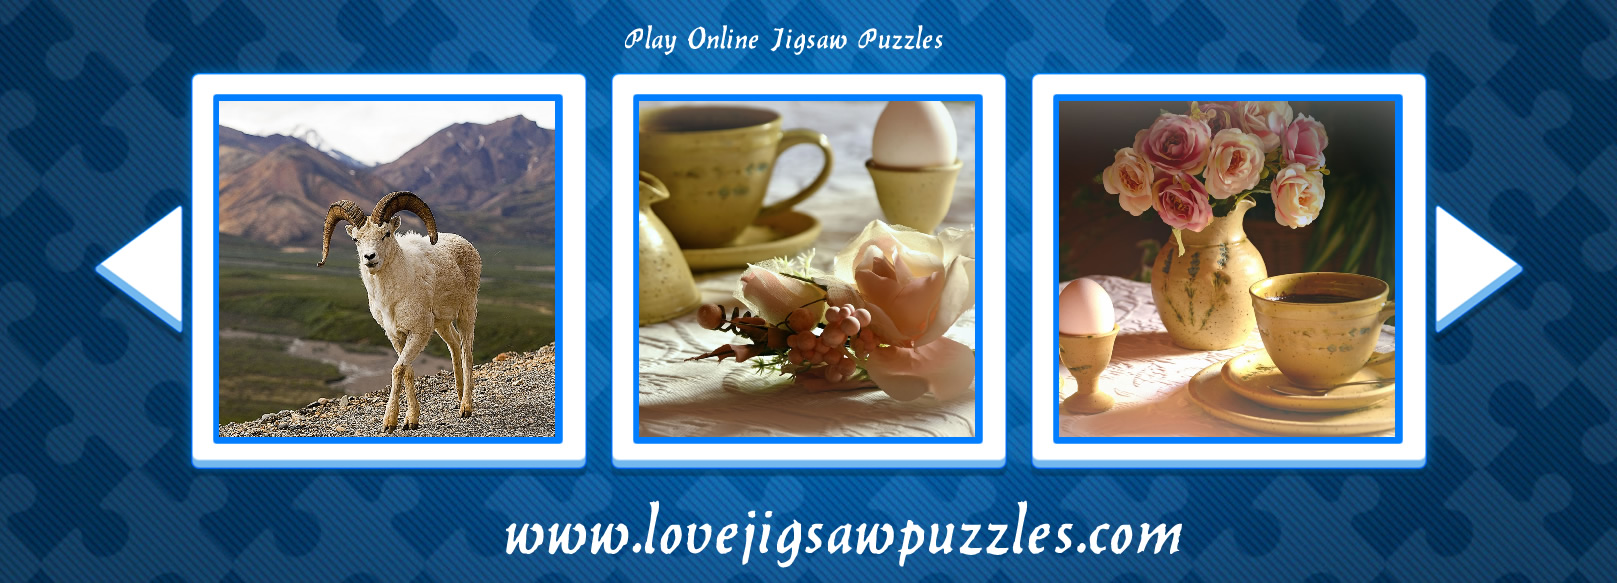 Free Jigsaw Puzzles